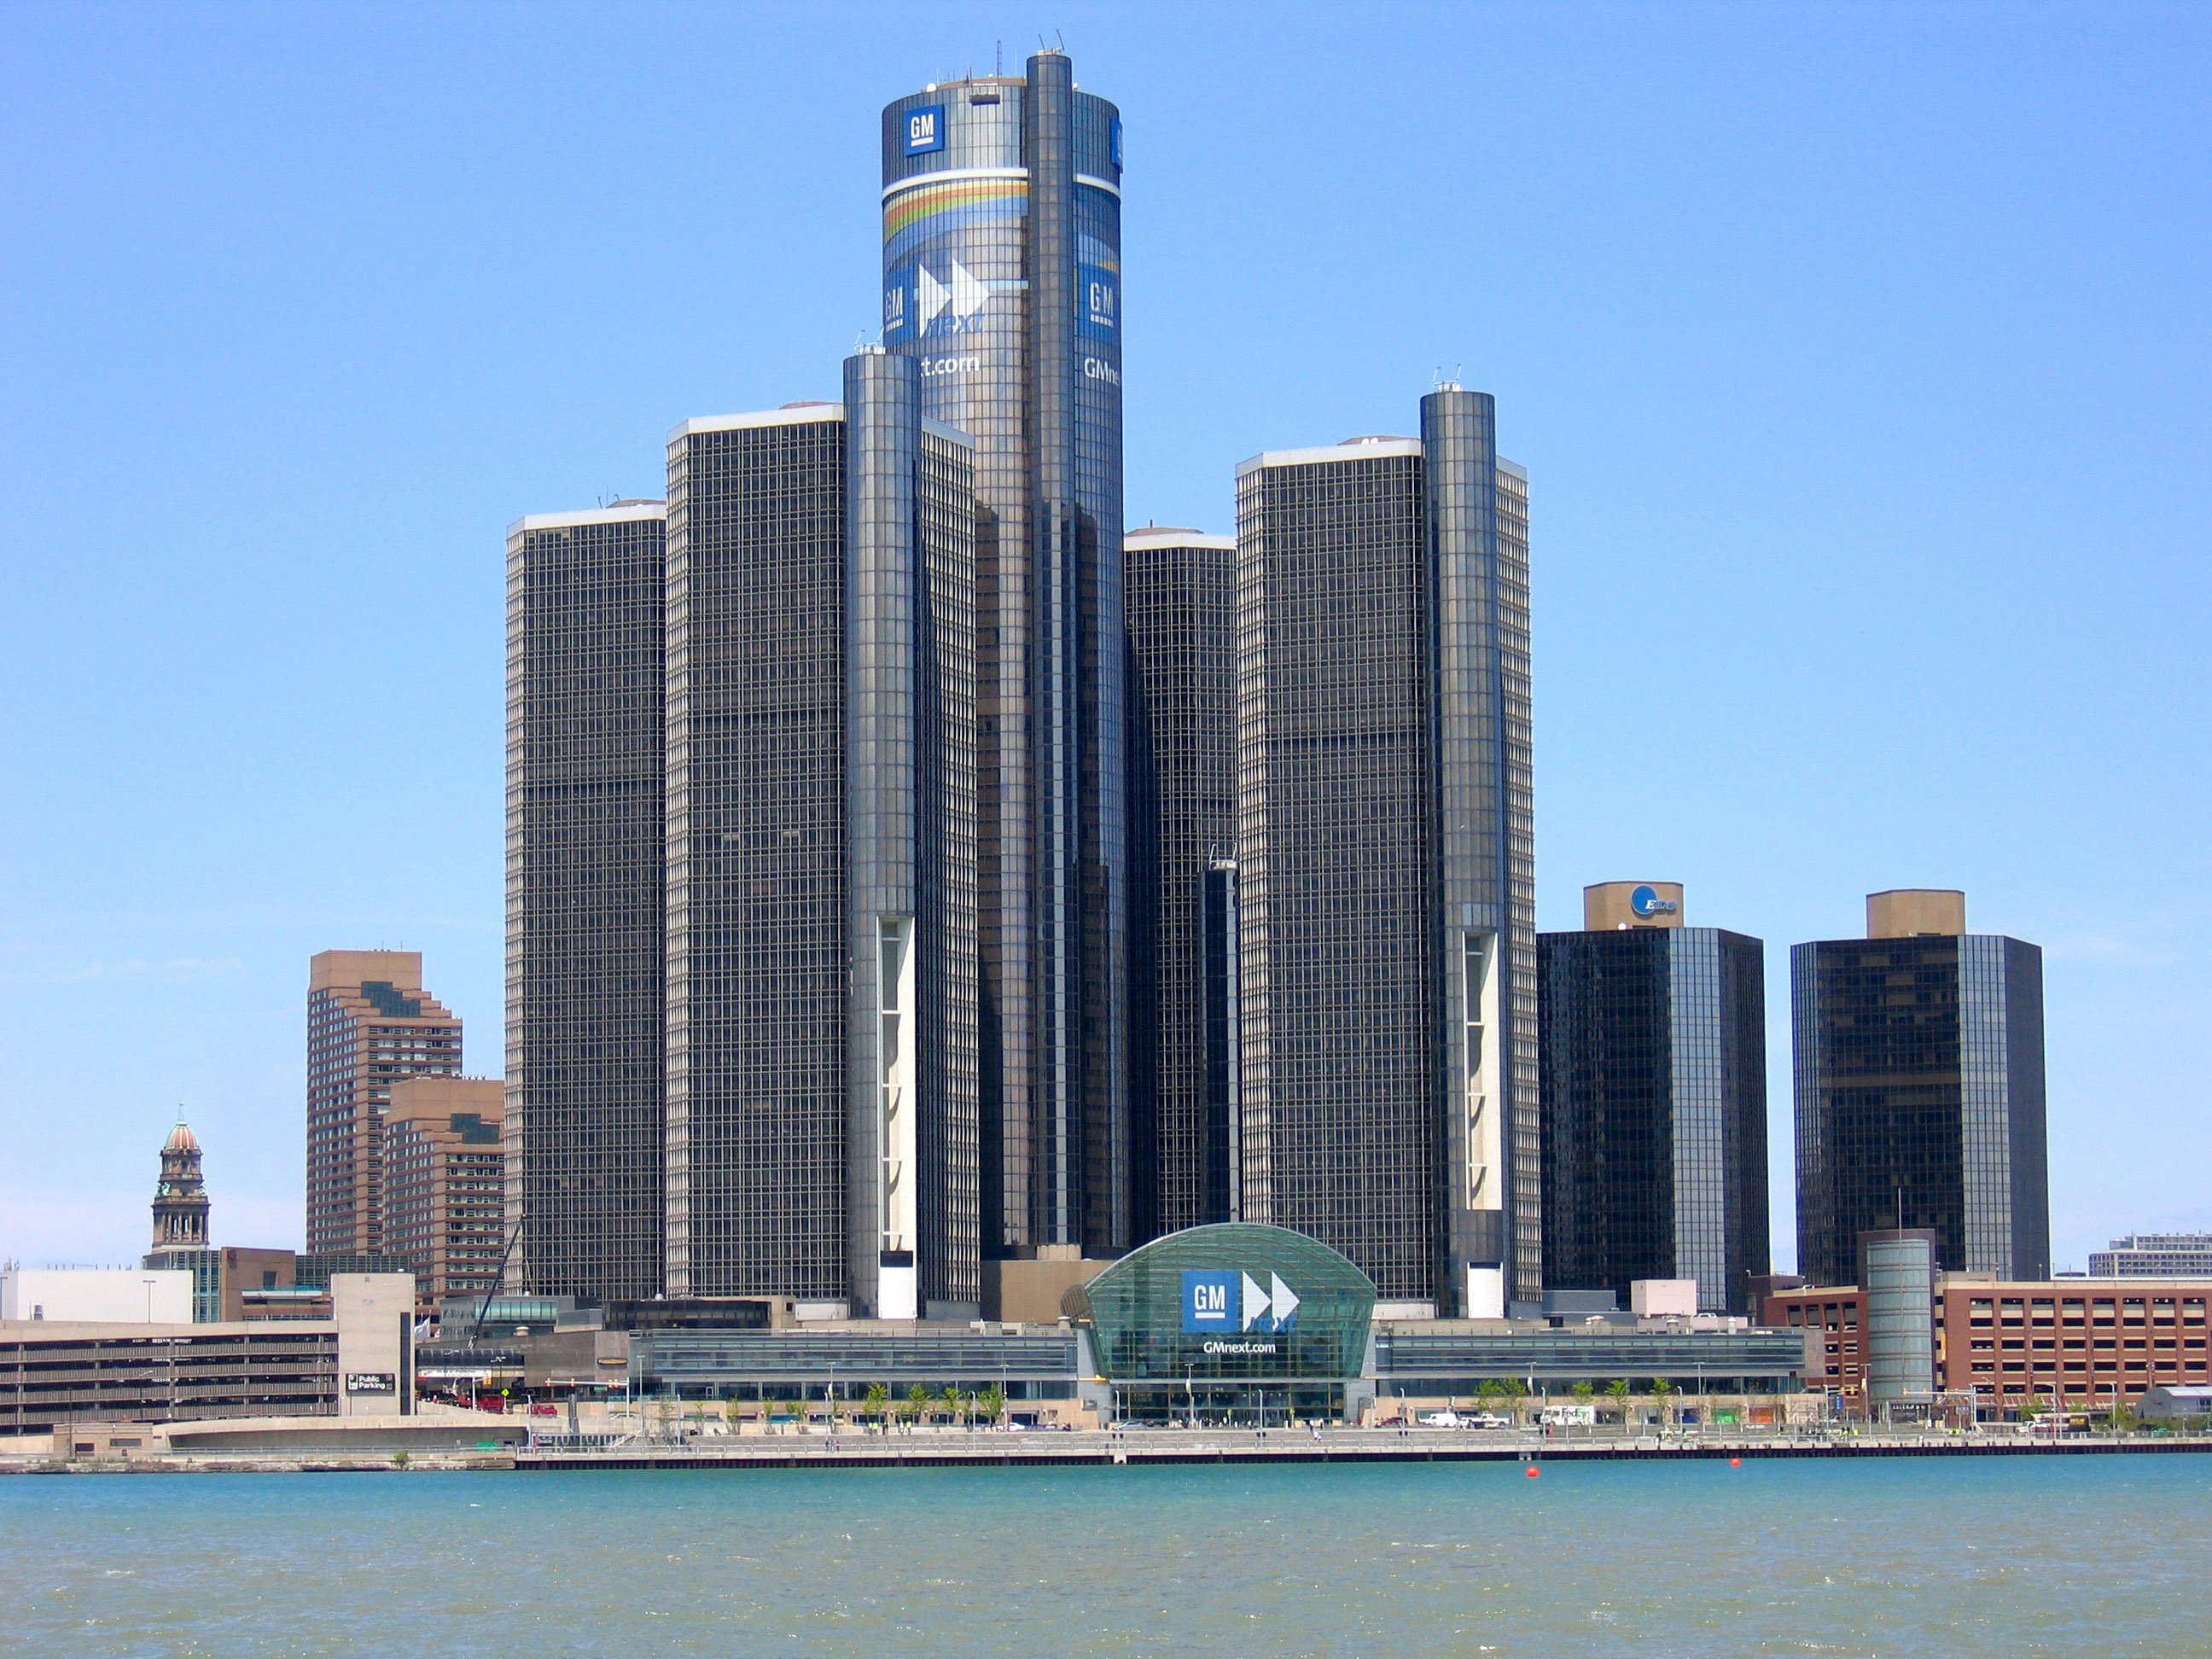 Renaissance Center The Headquarters Of General Motors In Detroit